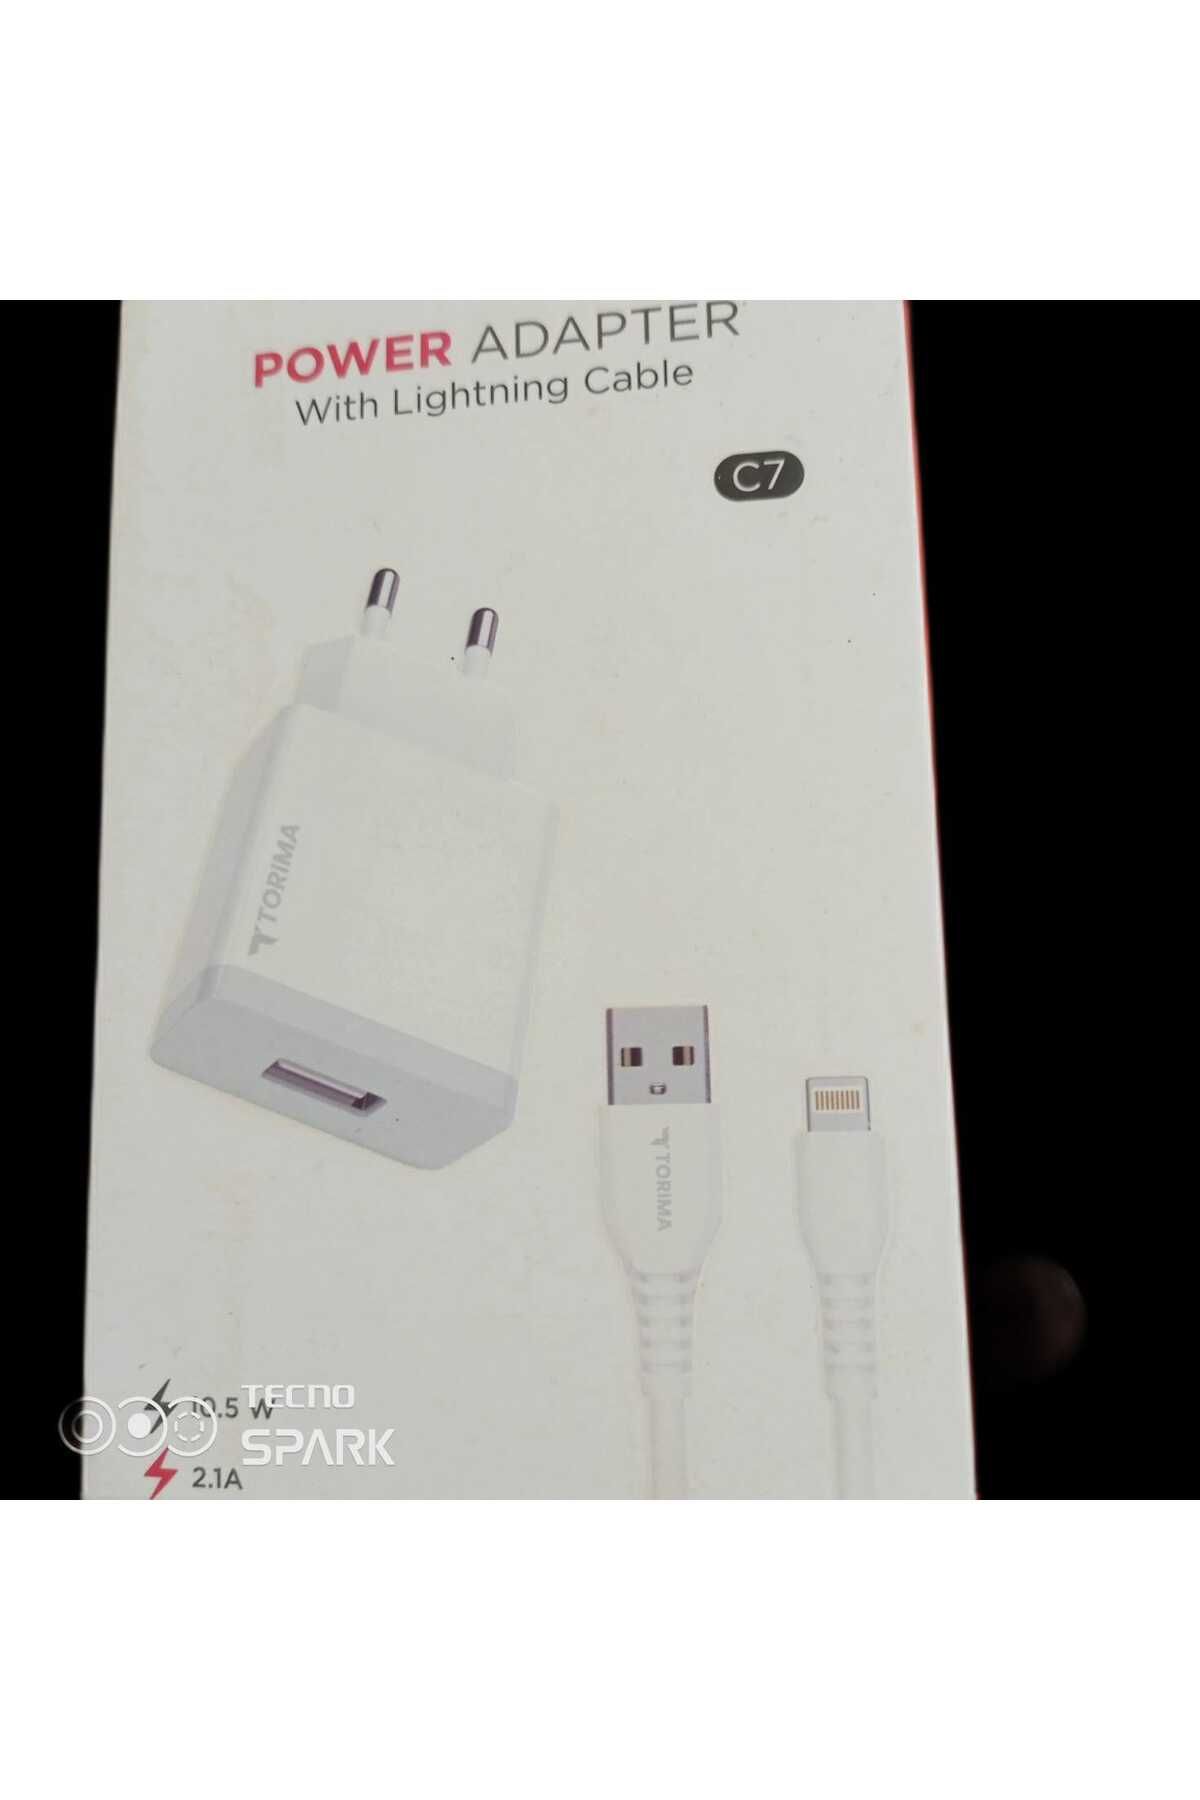 Torima Power Adapter Wiht Lightning Cable